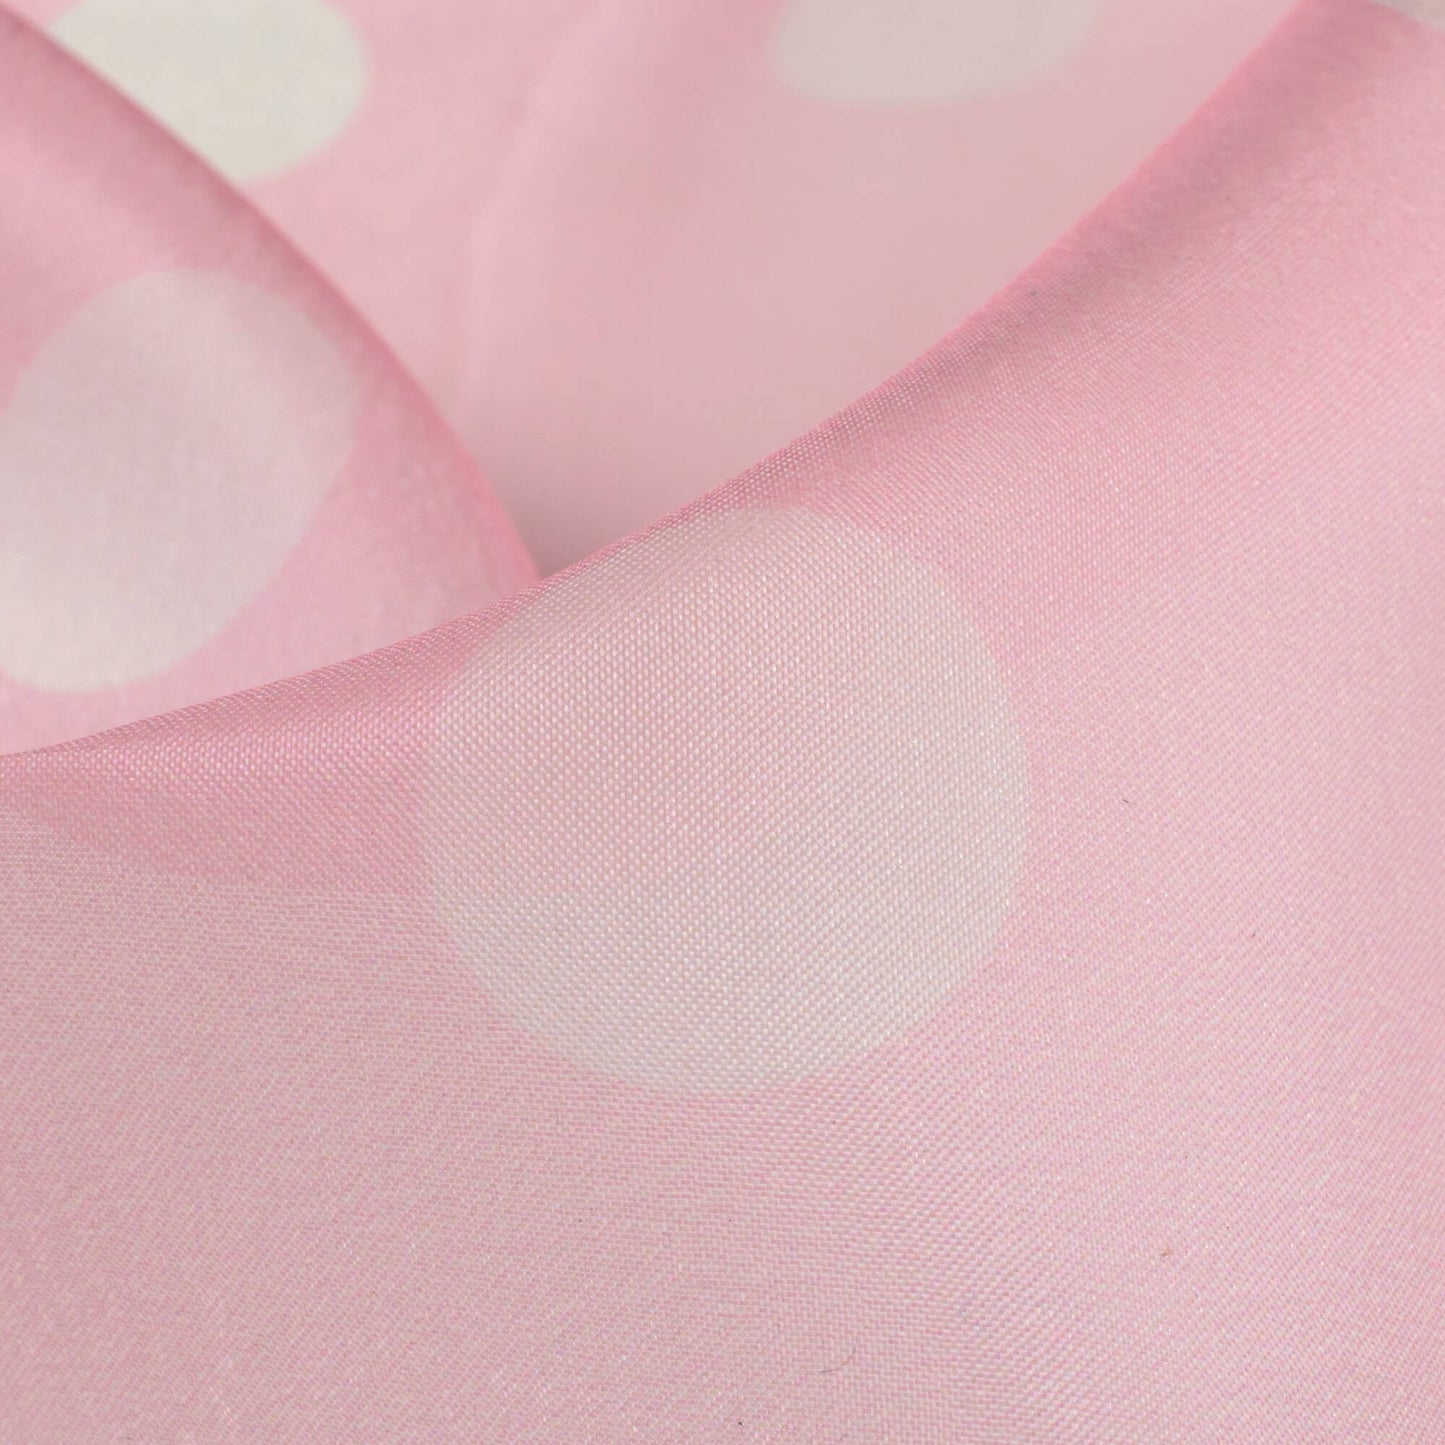 Pale Pink And White Polka Dots Pattern Digital Print Organza Satin Fabric